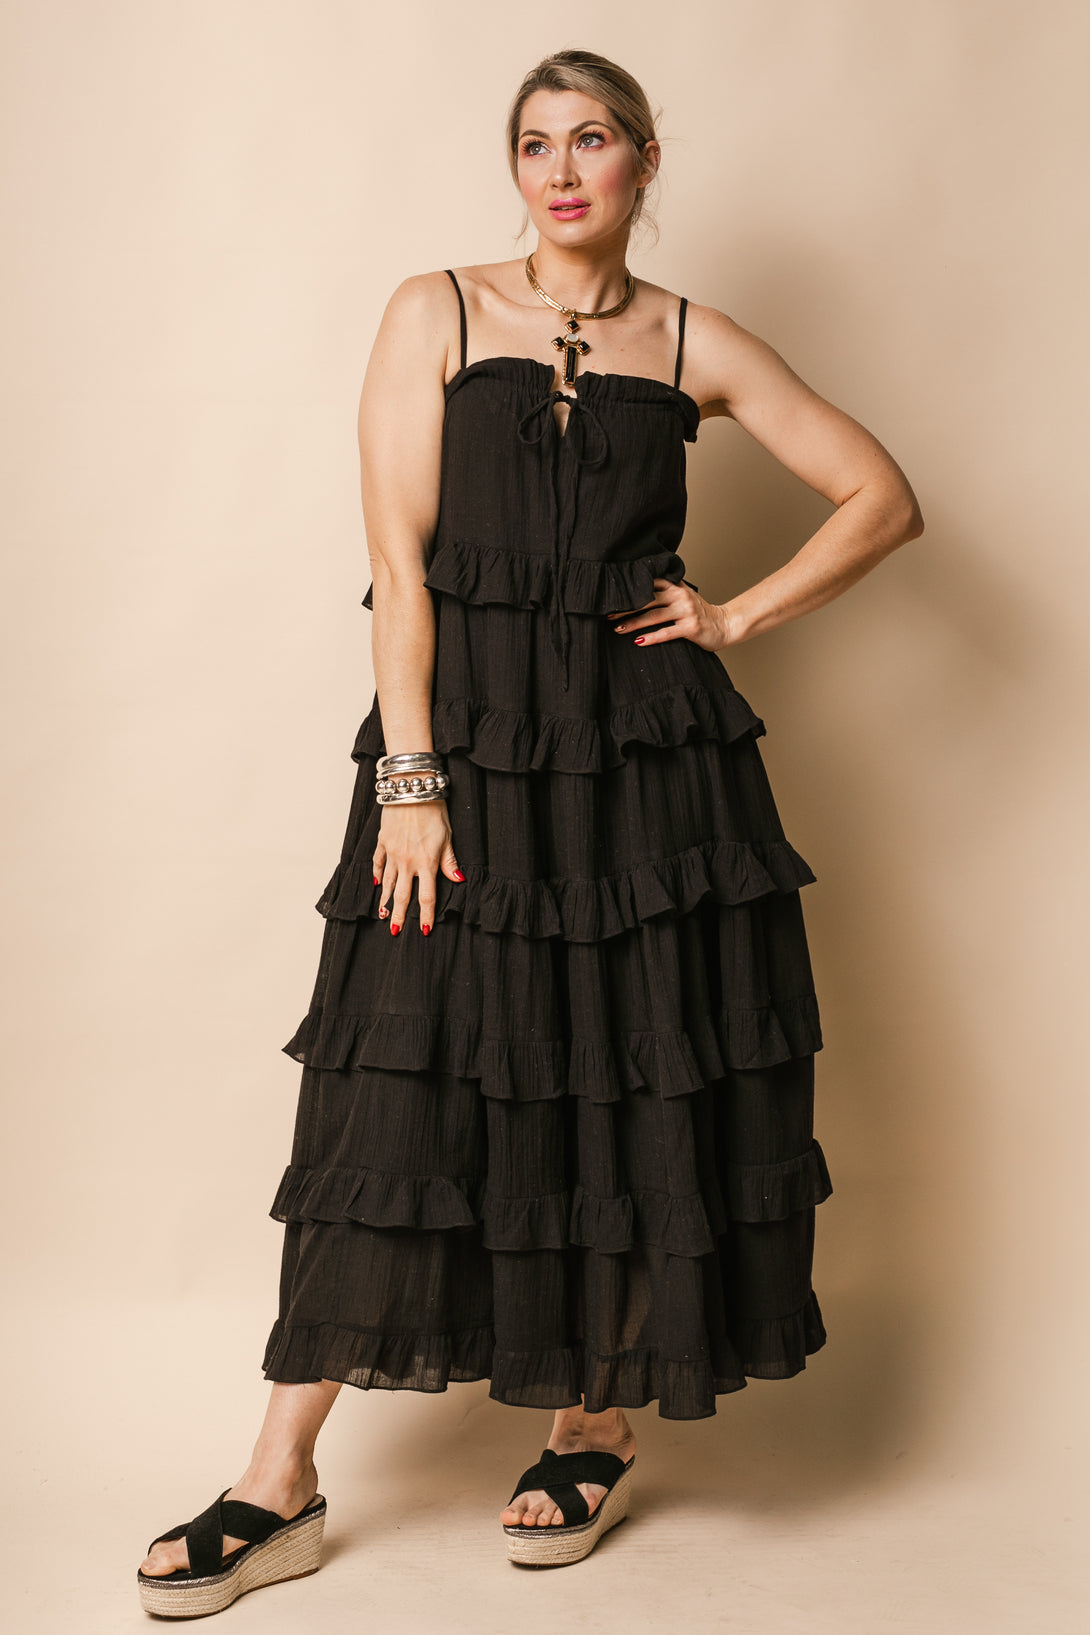 Callie Cotton Dress in Onyx - Imagine Fashion